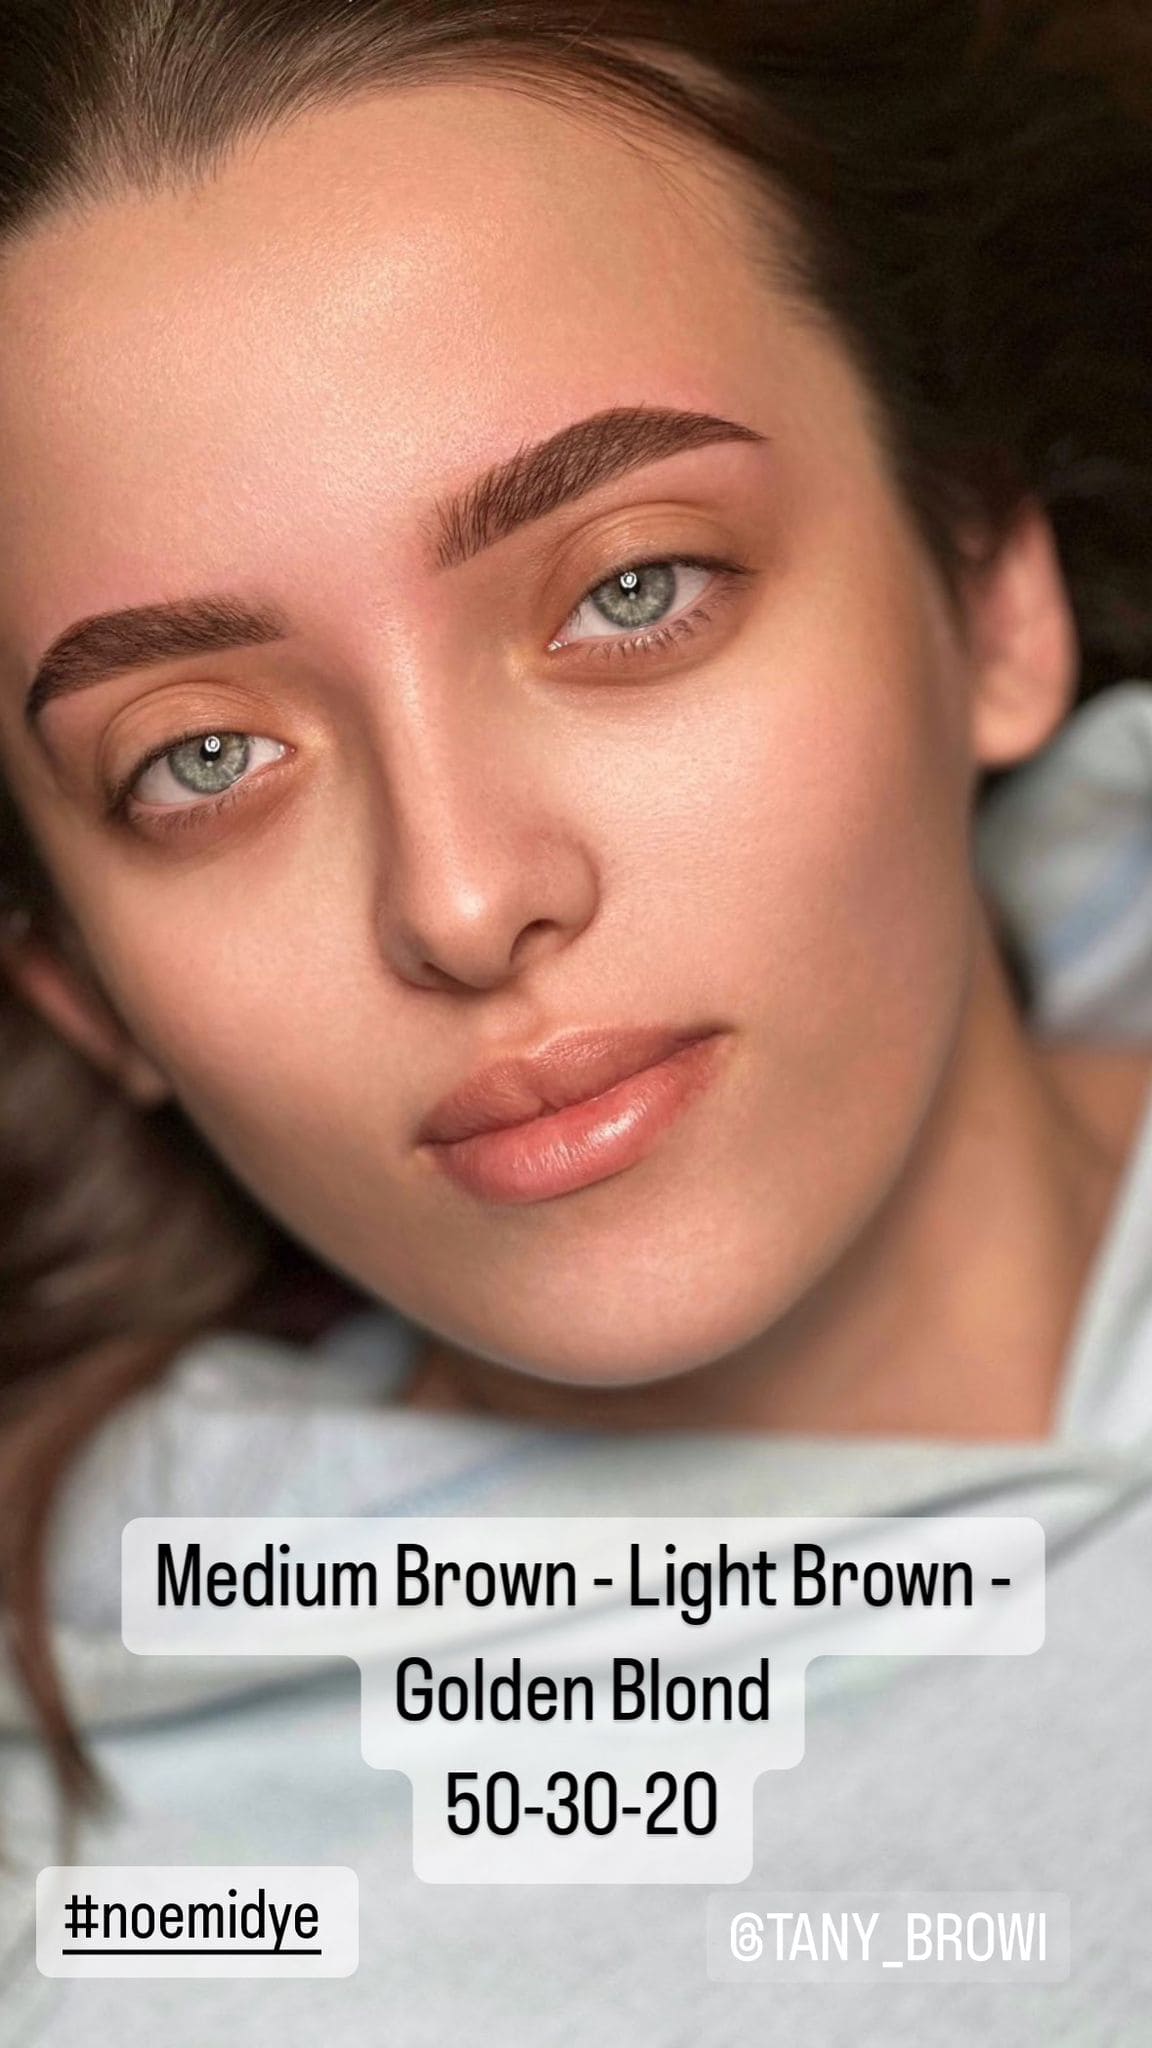 Female brow medium brown, light brown and golden blond mix